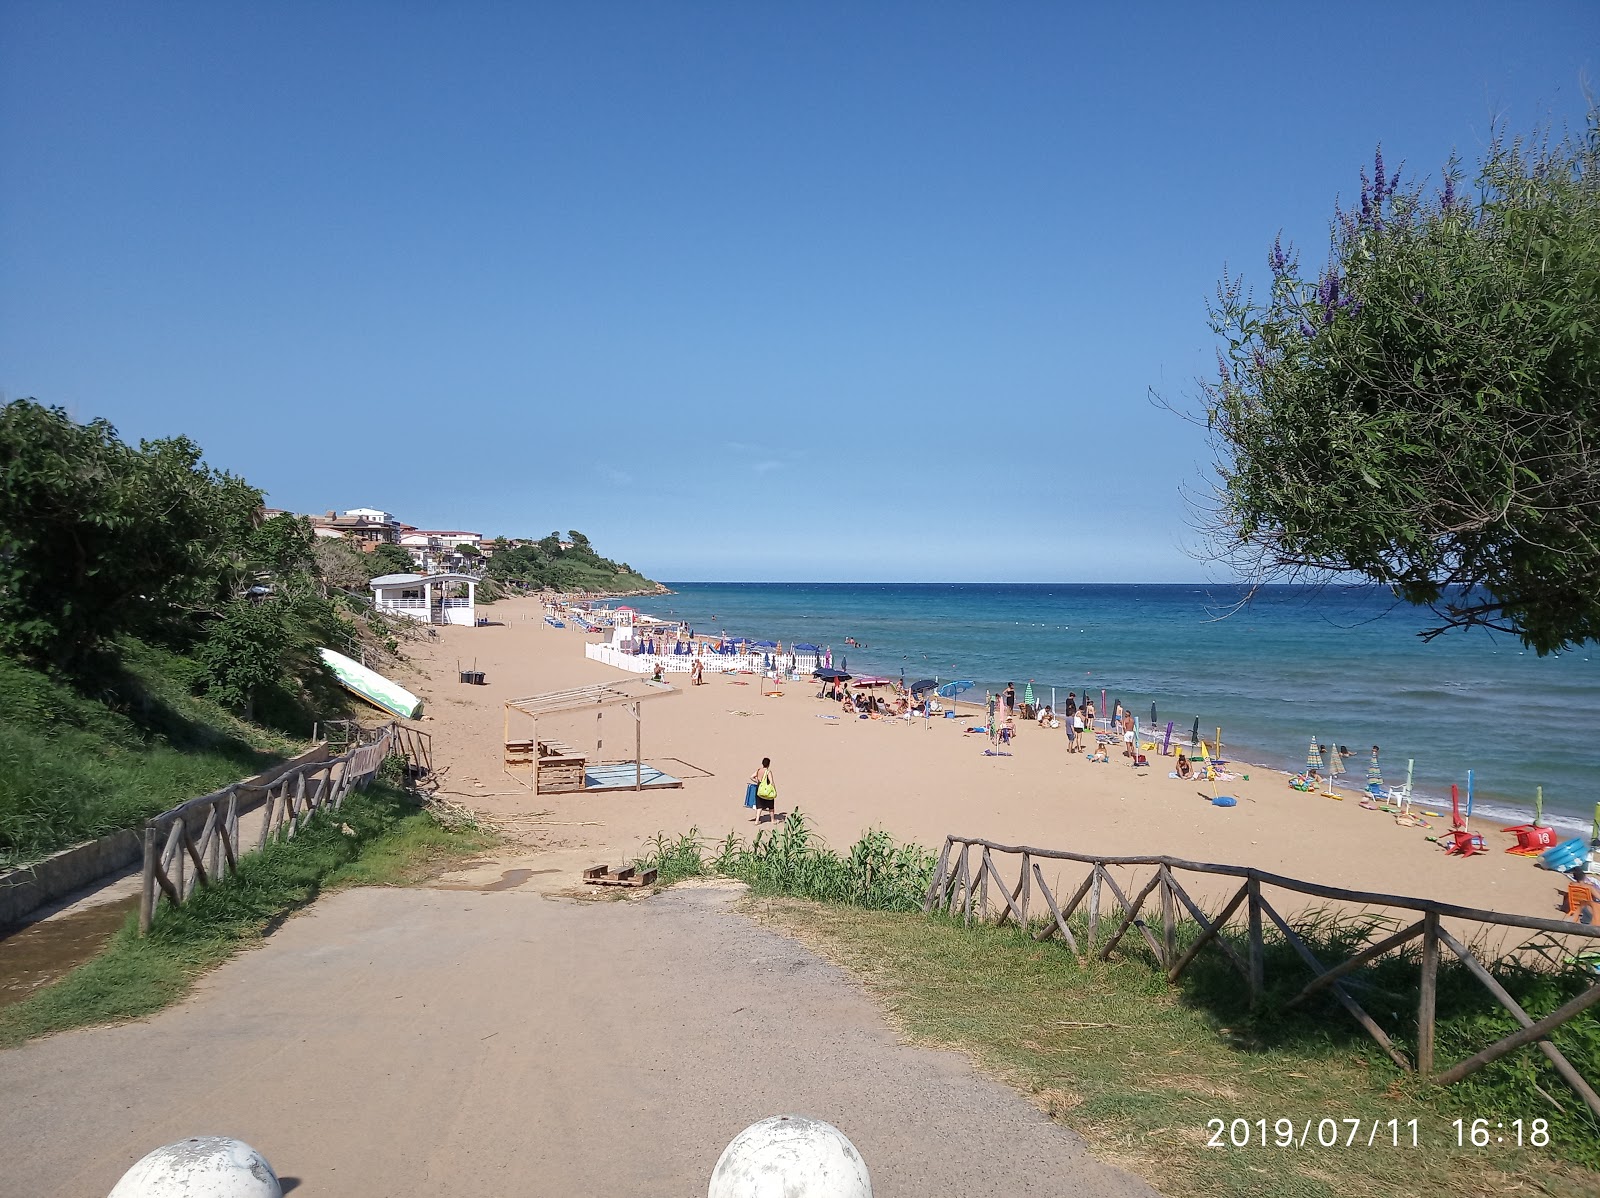 Spiaggia Rossa'in fotoğrafı geniş plaj ile birlikte